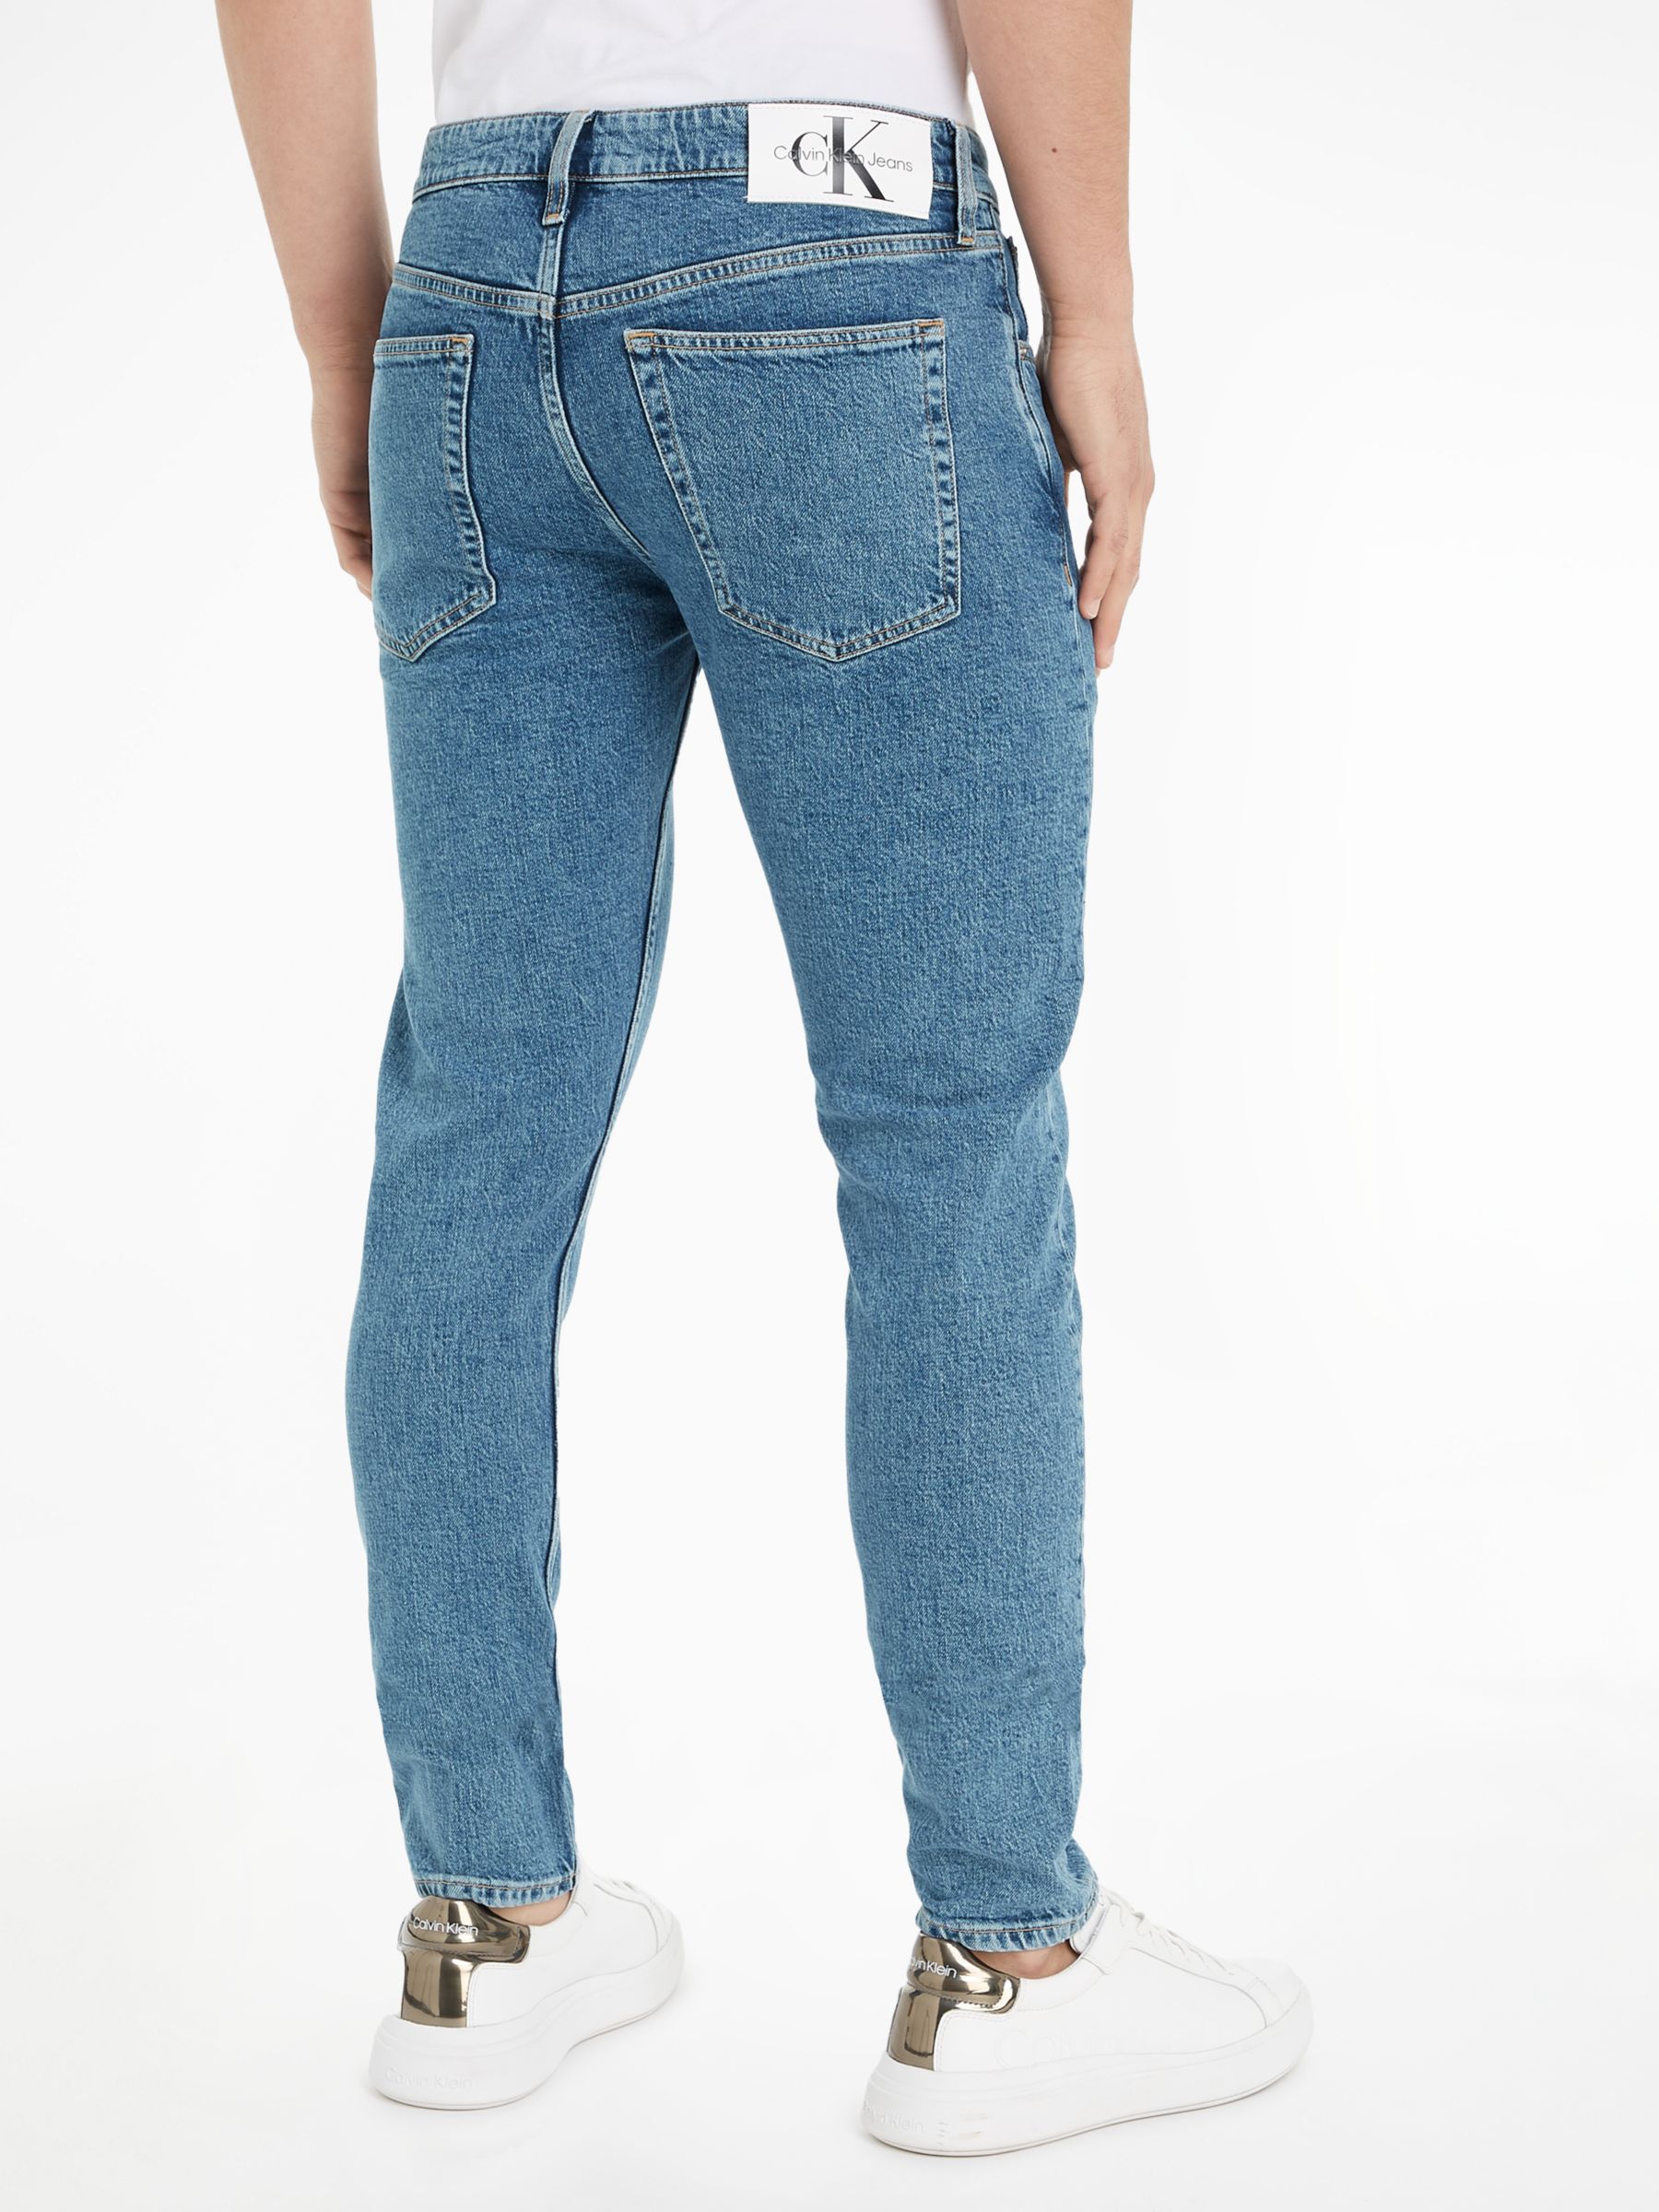 Calvin Klein Jeans Slim Taper Jeans, Light Denim at John Lewis & Partners